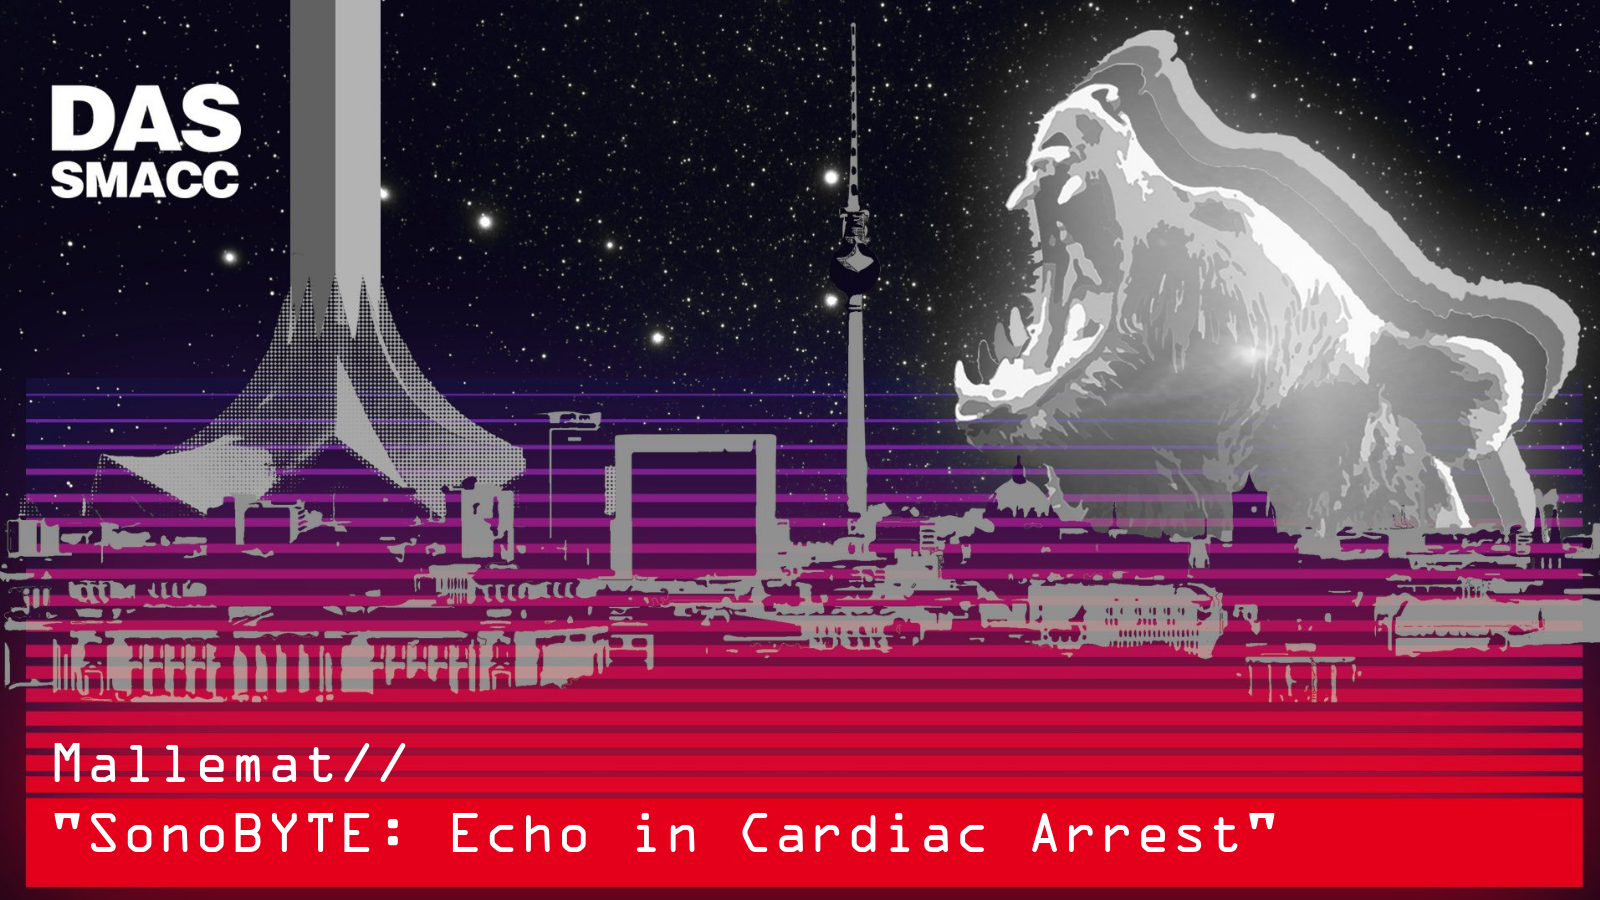 SonoBYTE: Echo in Cardiac Arrest